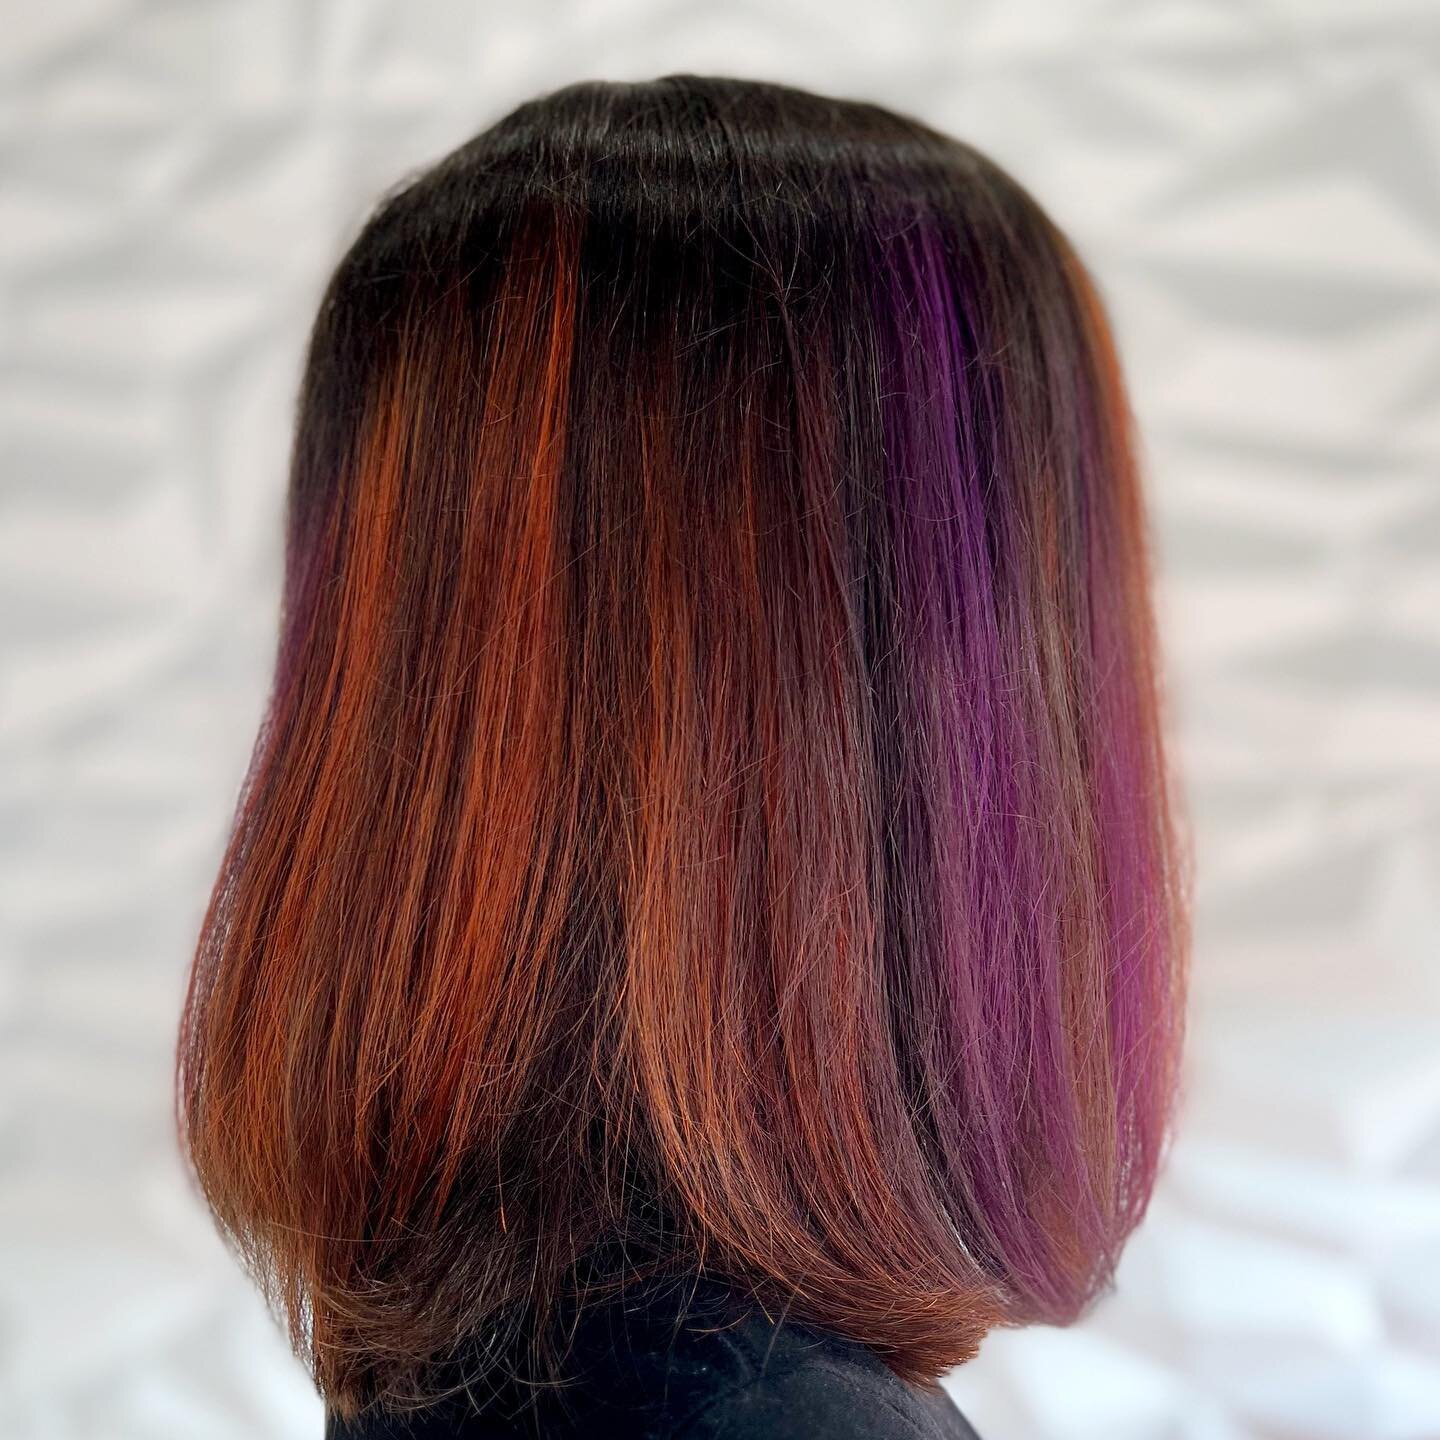 Orange and purple refresh by Holly (swipe to see the before)
.
.
.
#fashioncolor #bostonsalon #hairtrends2023 #winterhair #winterhaircolor #salonperfect #colorlove #lexingtonma #bostonhairsalon